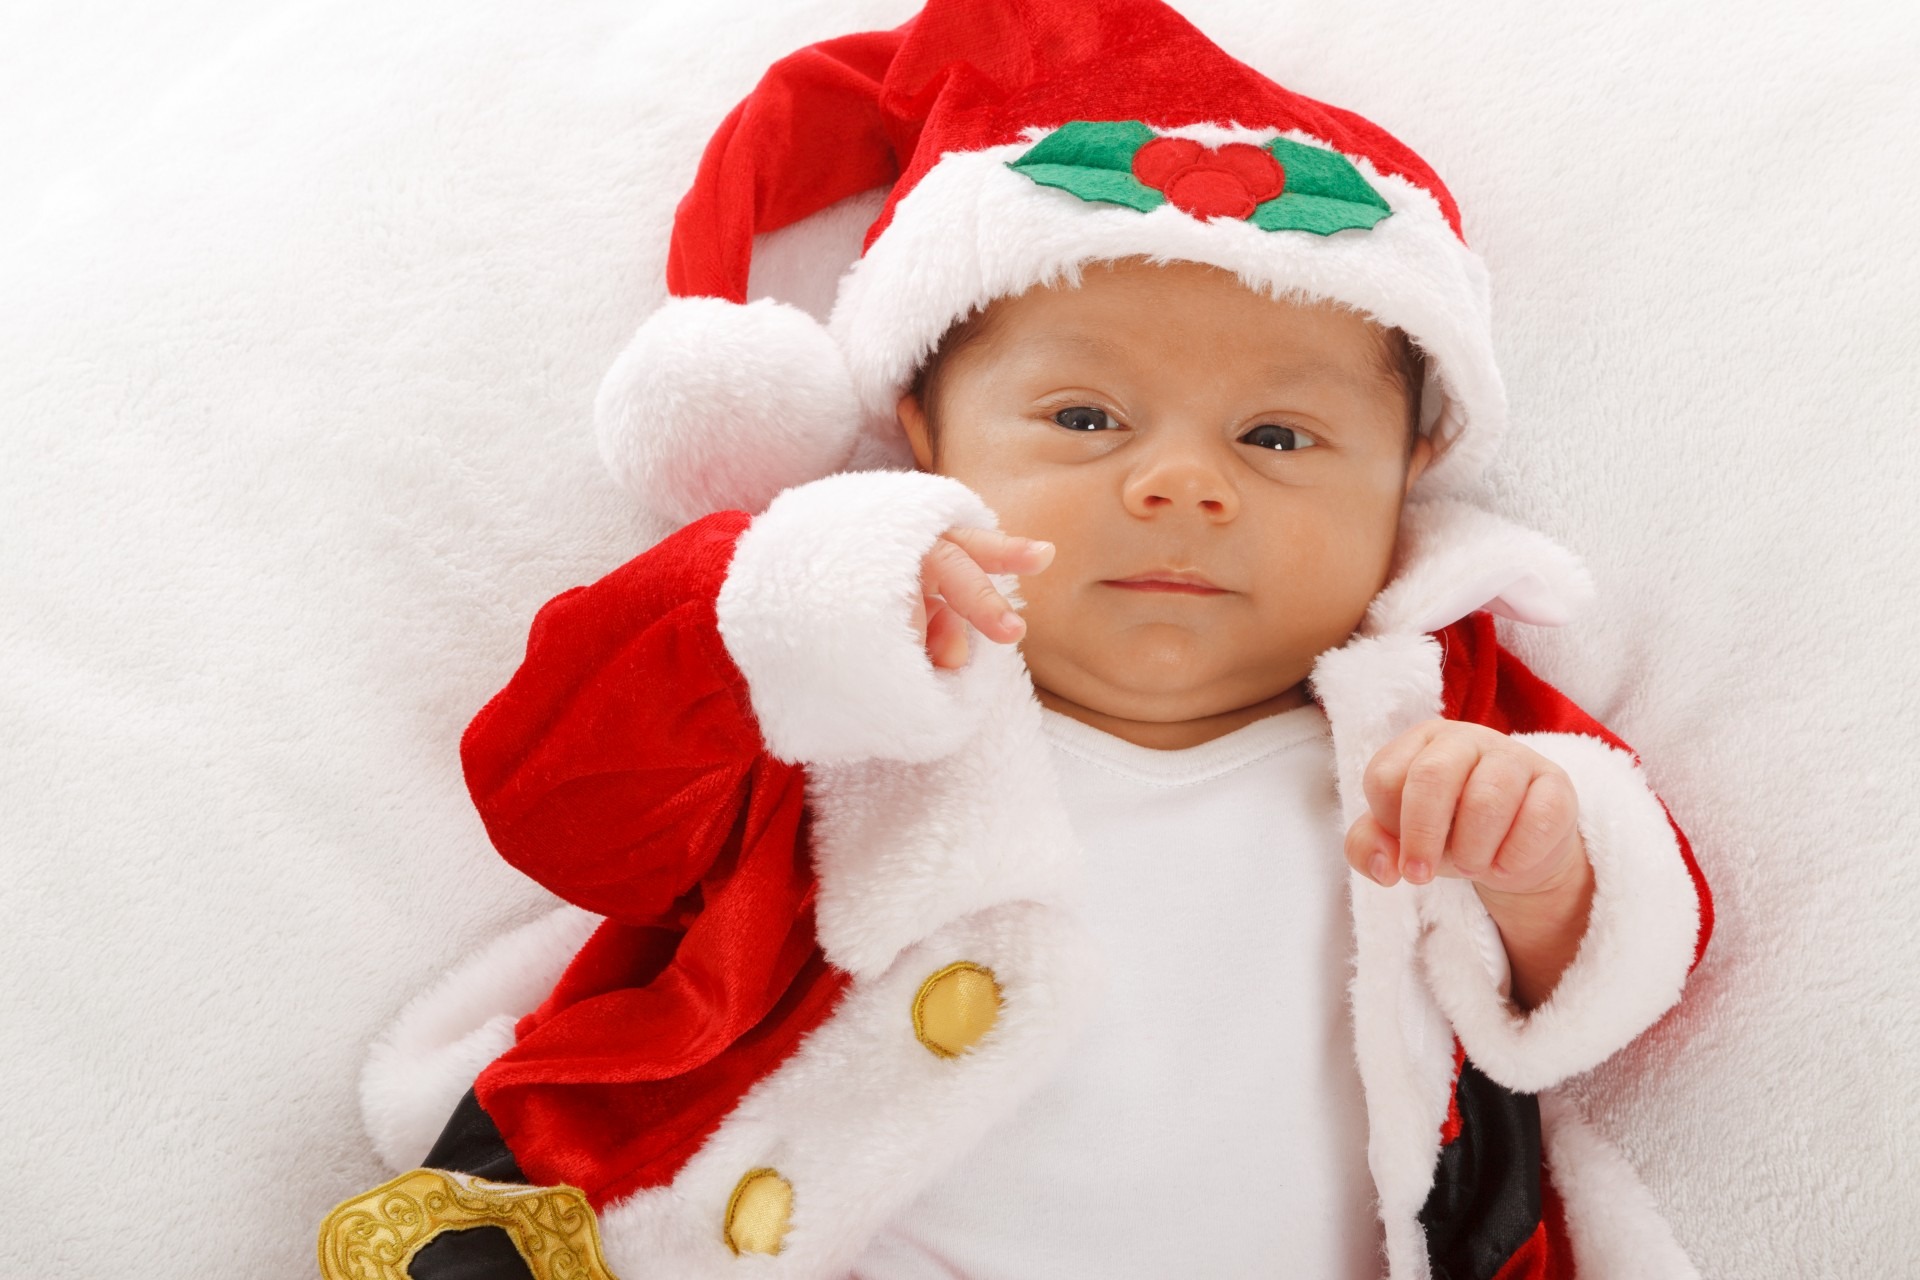 Adorable baby christmas celebration free image download